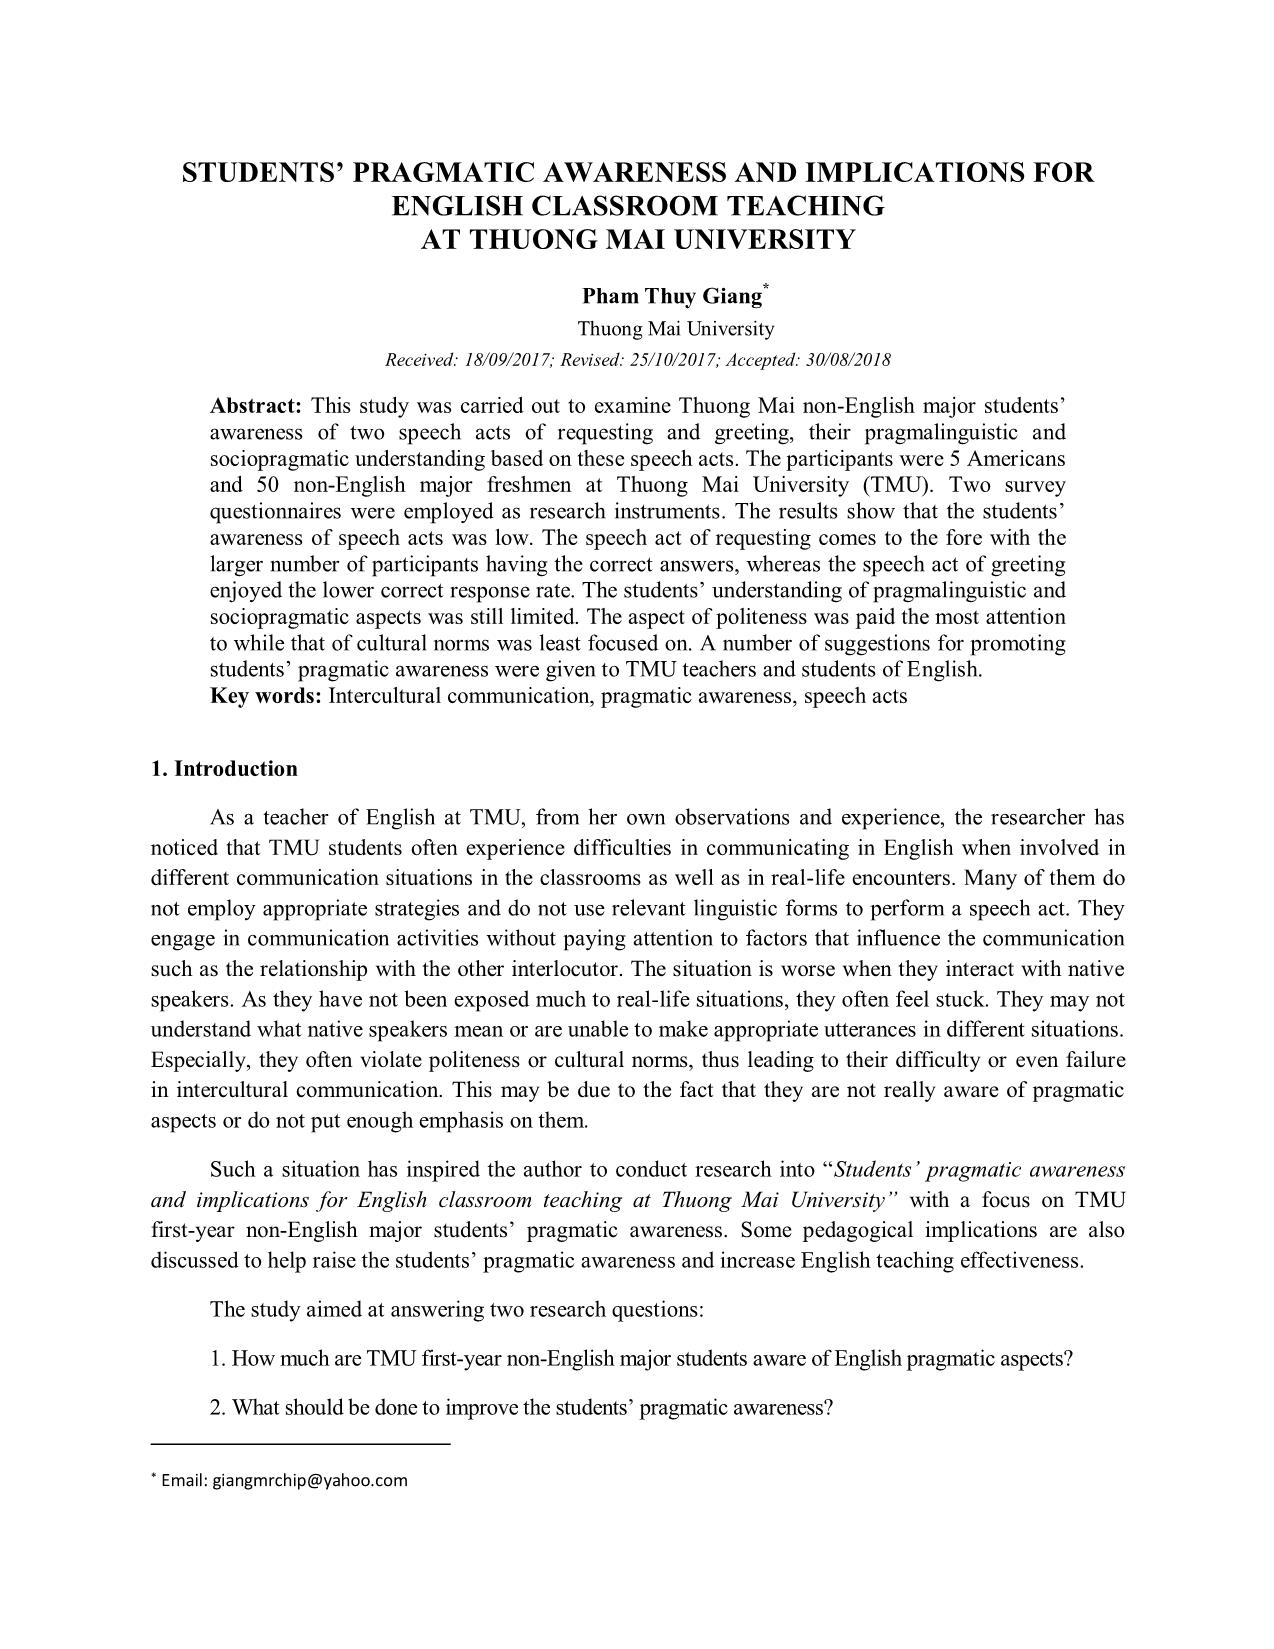 Students’ pragmatic awareness and implications for english classroom teaching at Thuong Mai University trang 1